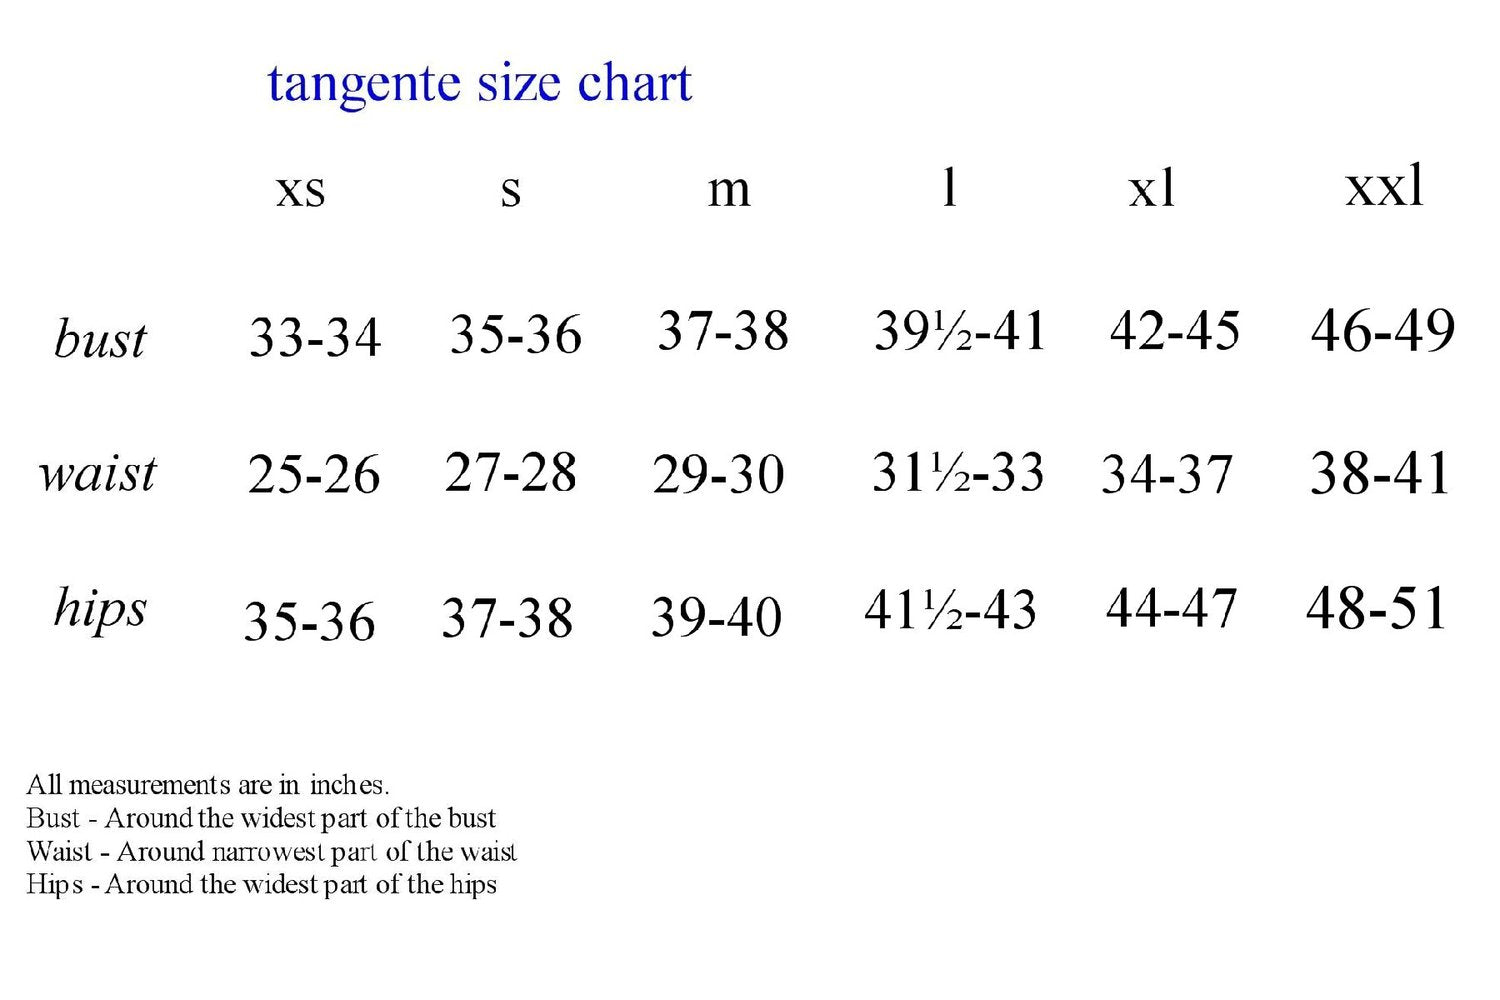 Tangente Size Chart